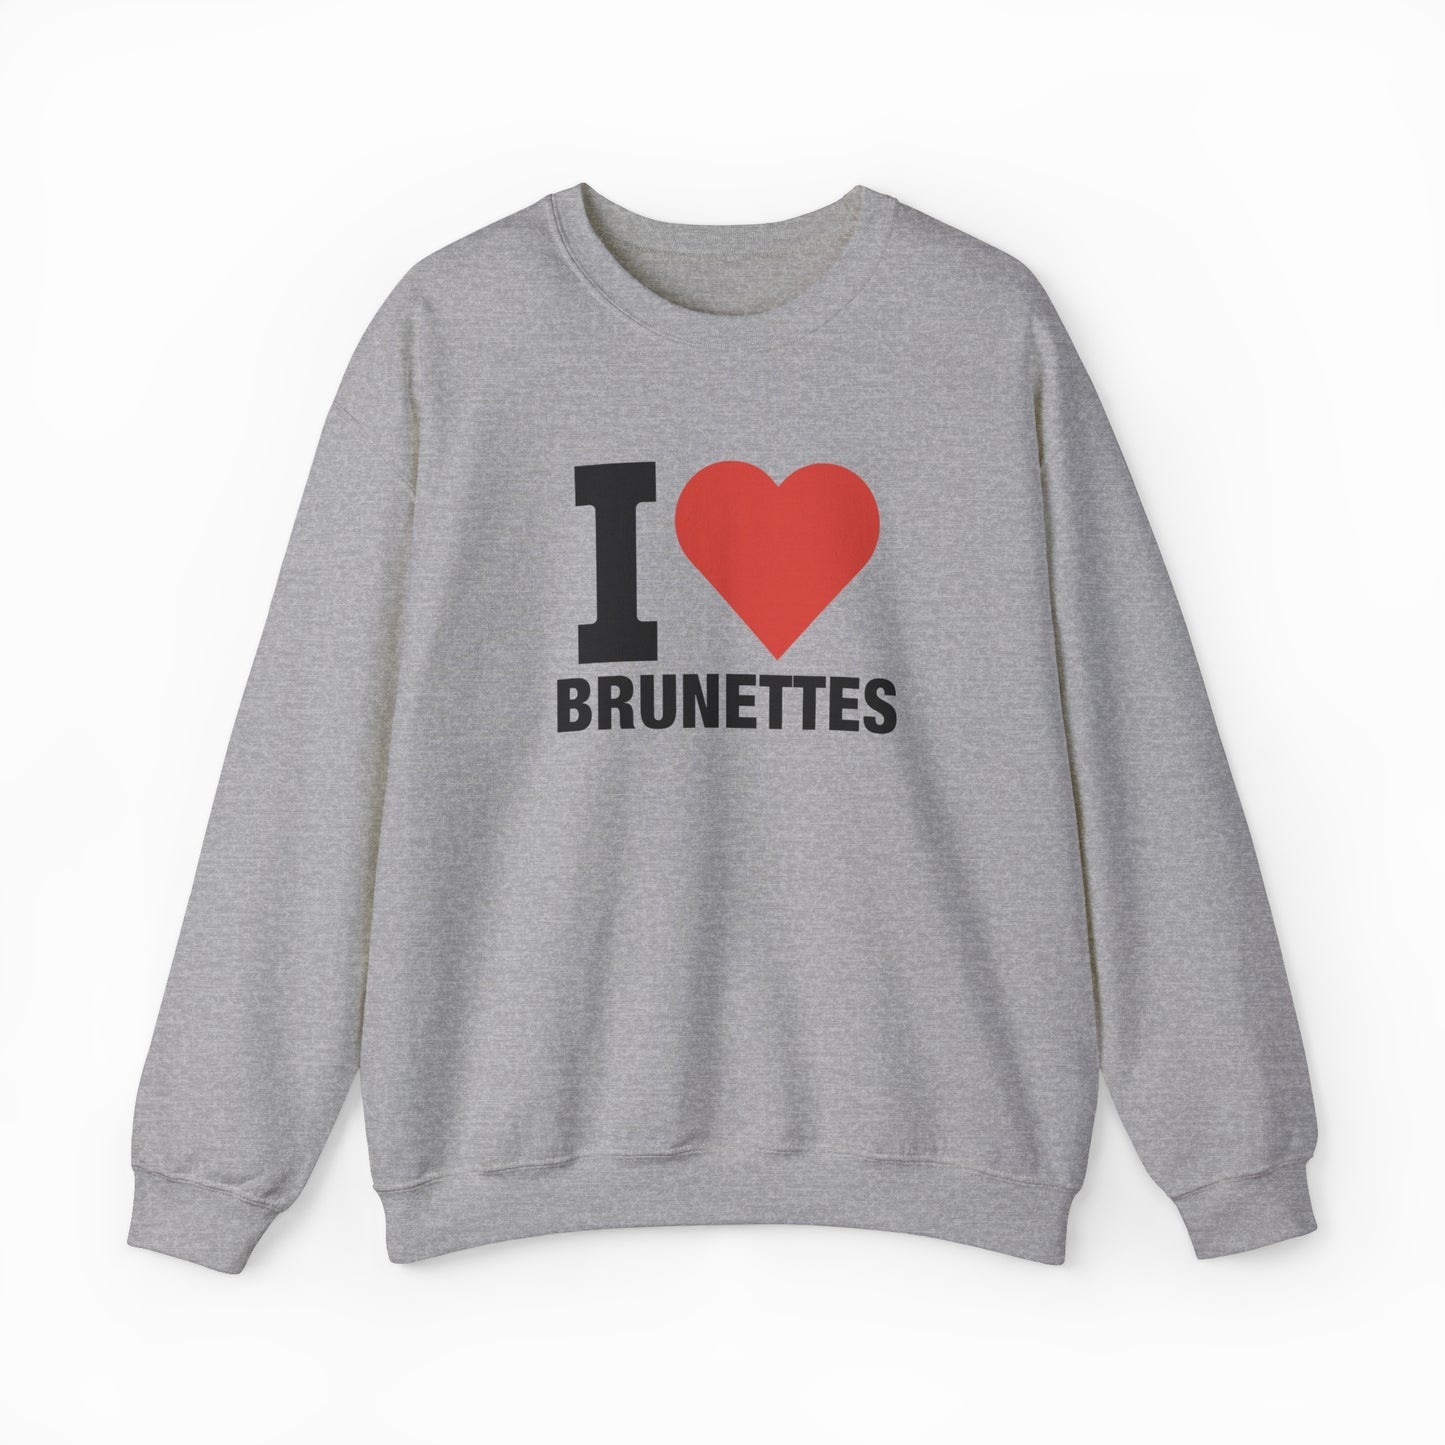 I Heart Brunettes Crewneck